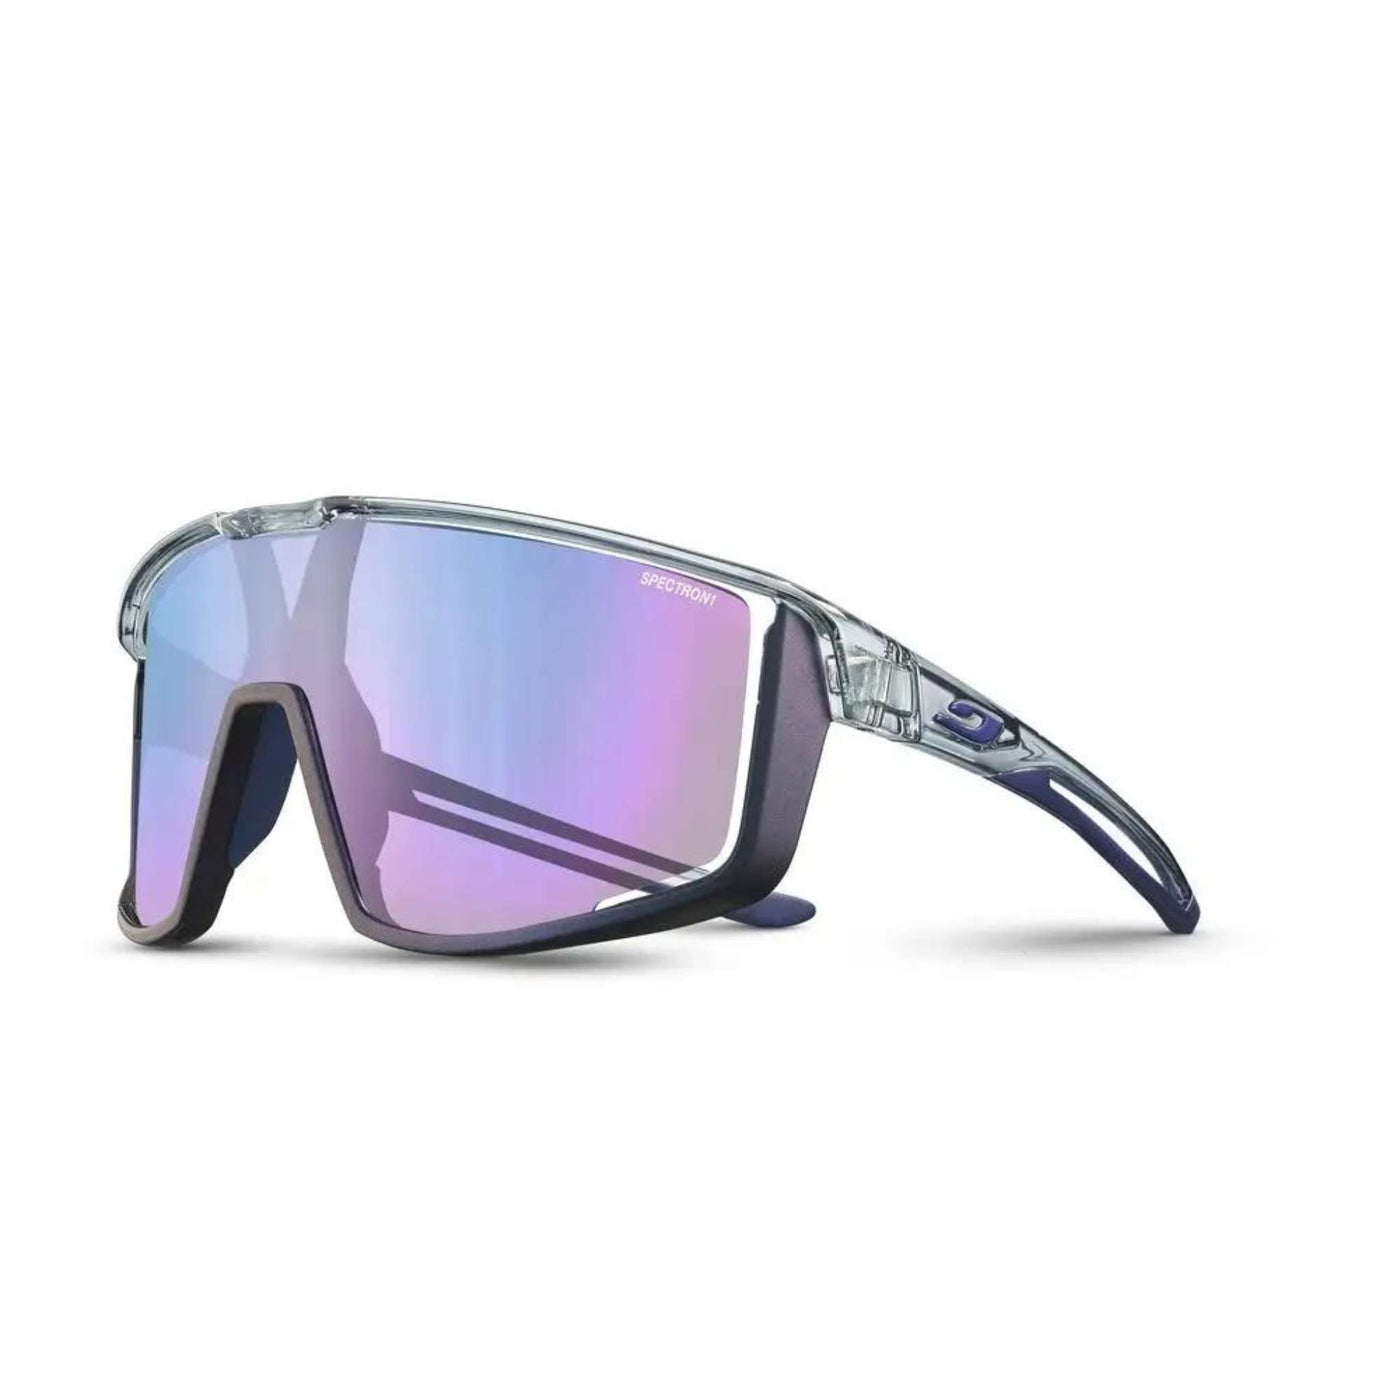 Julbo Fury Grey/Purple Sunglasses - Spectron 1CF Lens | Performance Sunglasses NZ | Further Faster Christchurch NZ